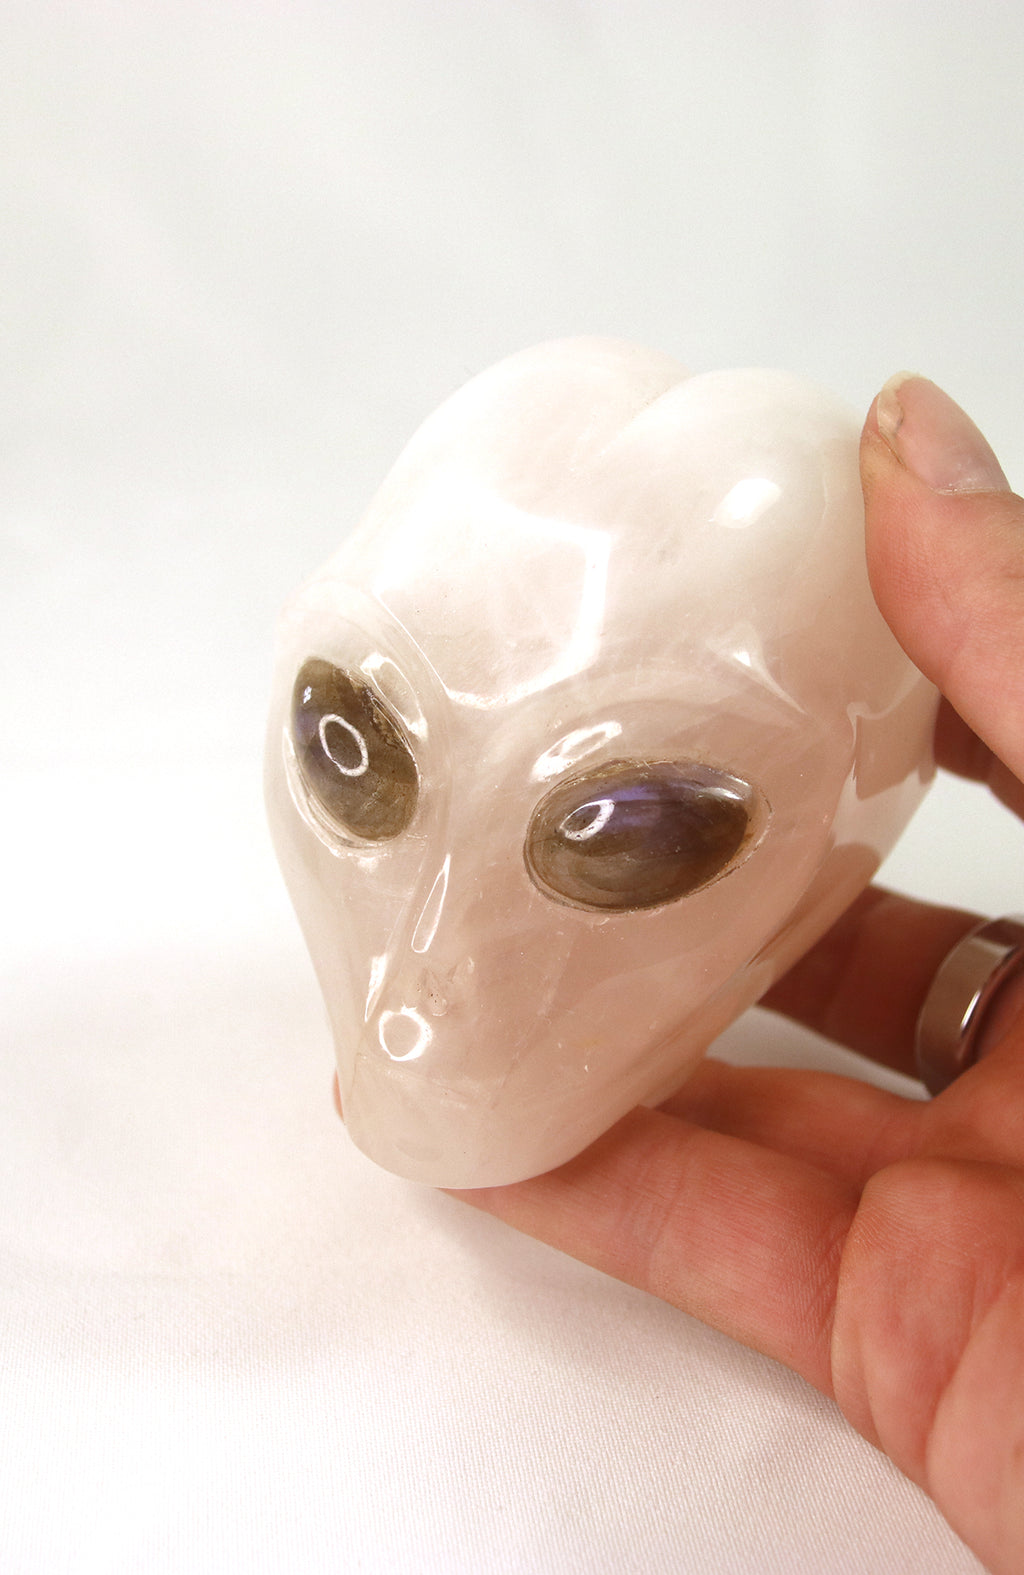 Rose Quartz ET Skull with Labradorite Eyes